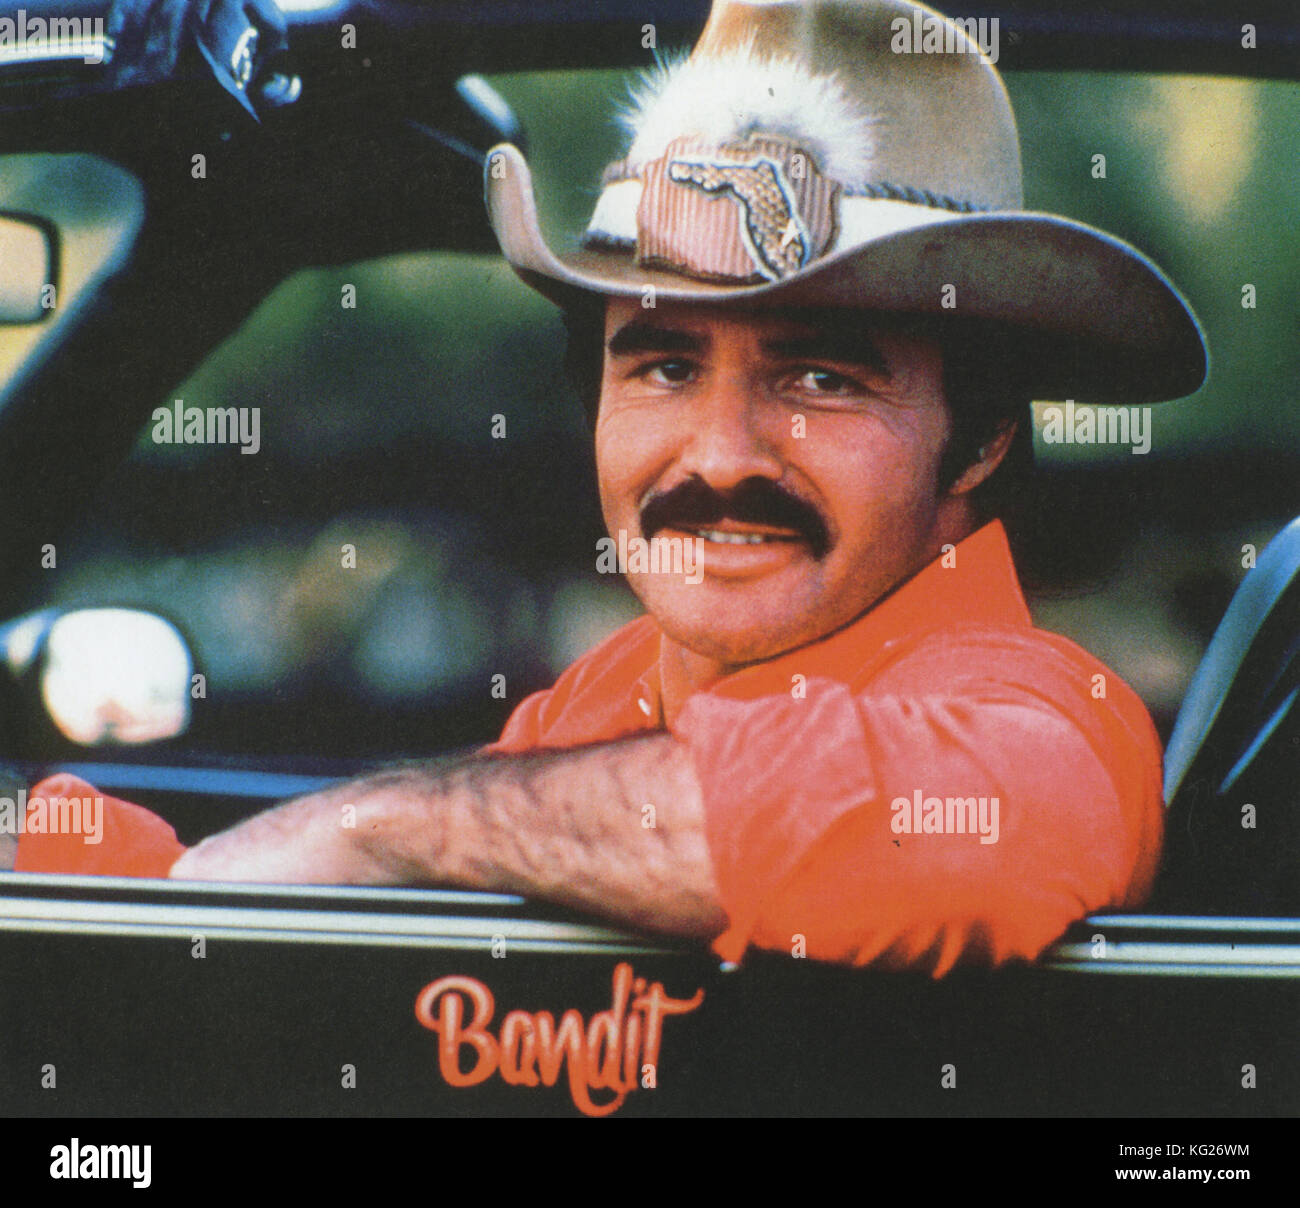 Smokey UND THE BANDITS 1977 Universal Film wityh Burt Reynolds Stockfoto